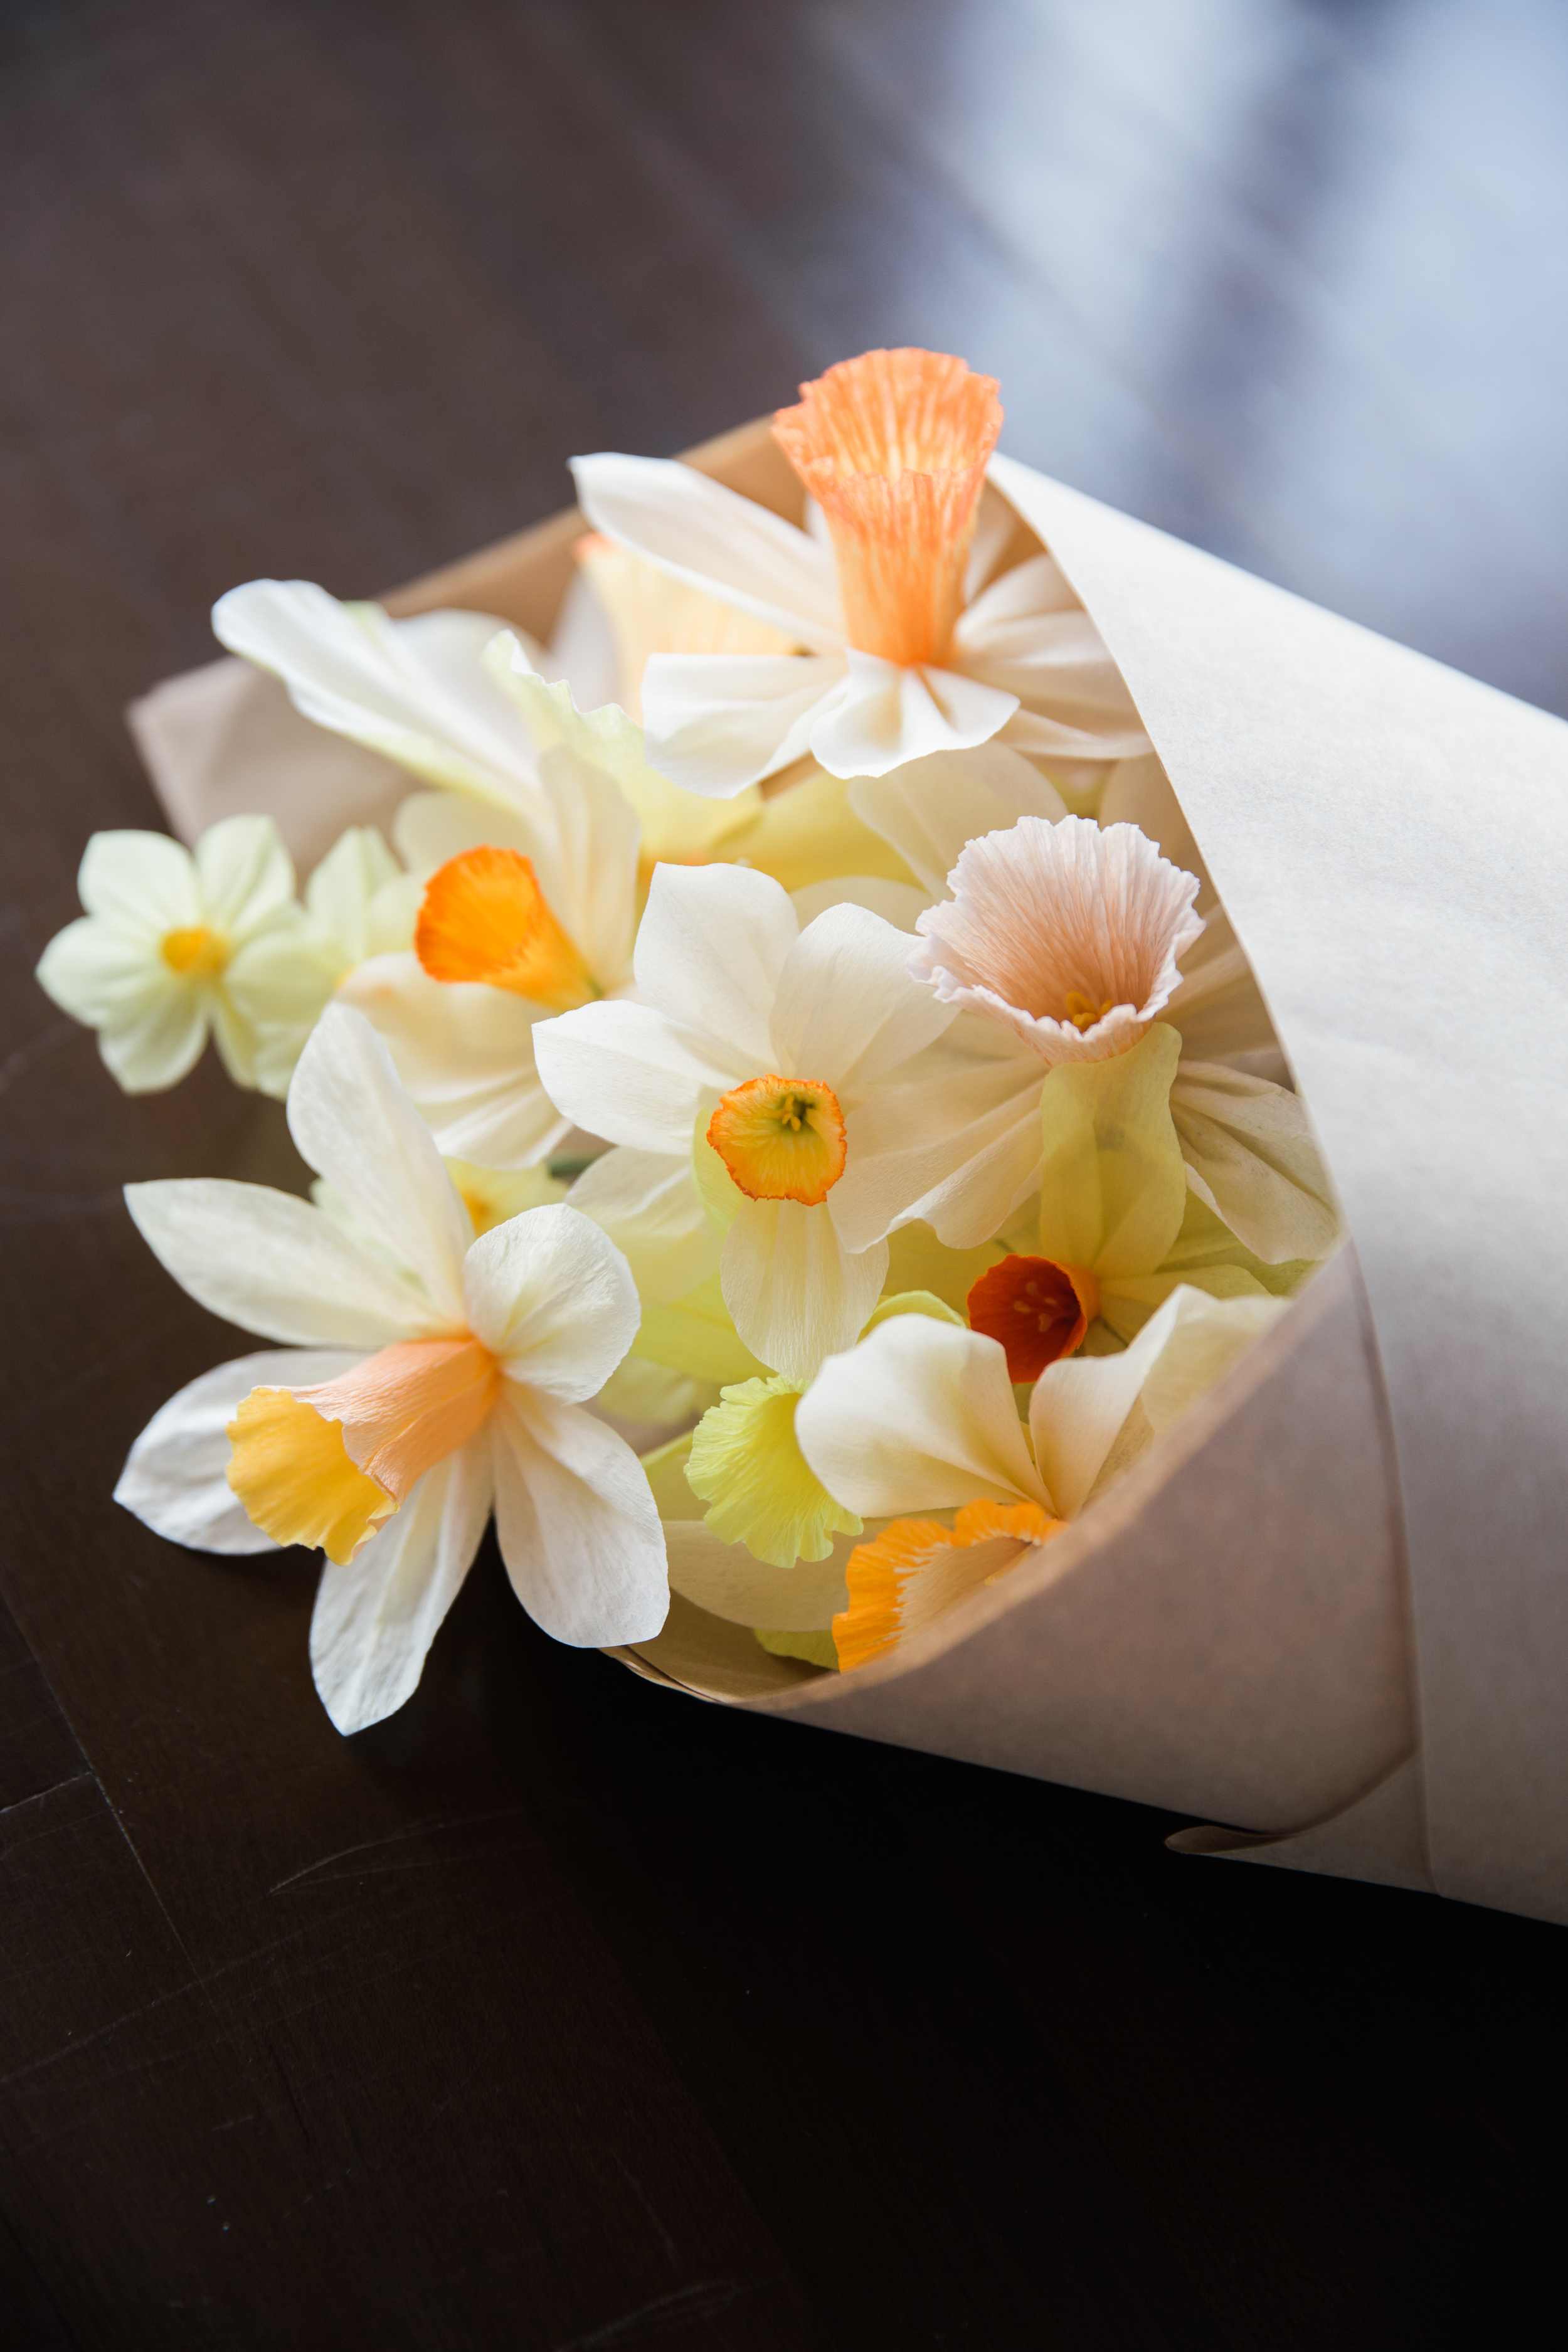 daffodil bouquet photo by Grace Kim